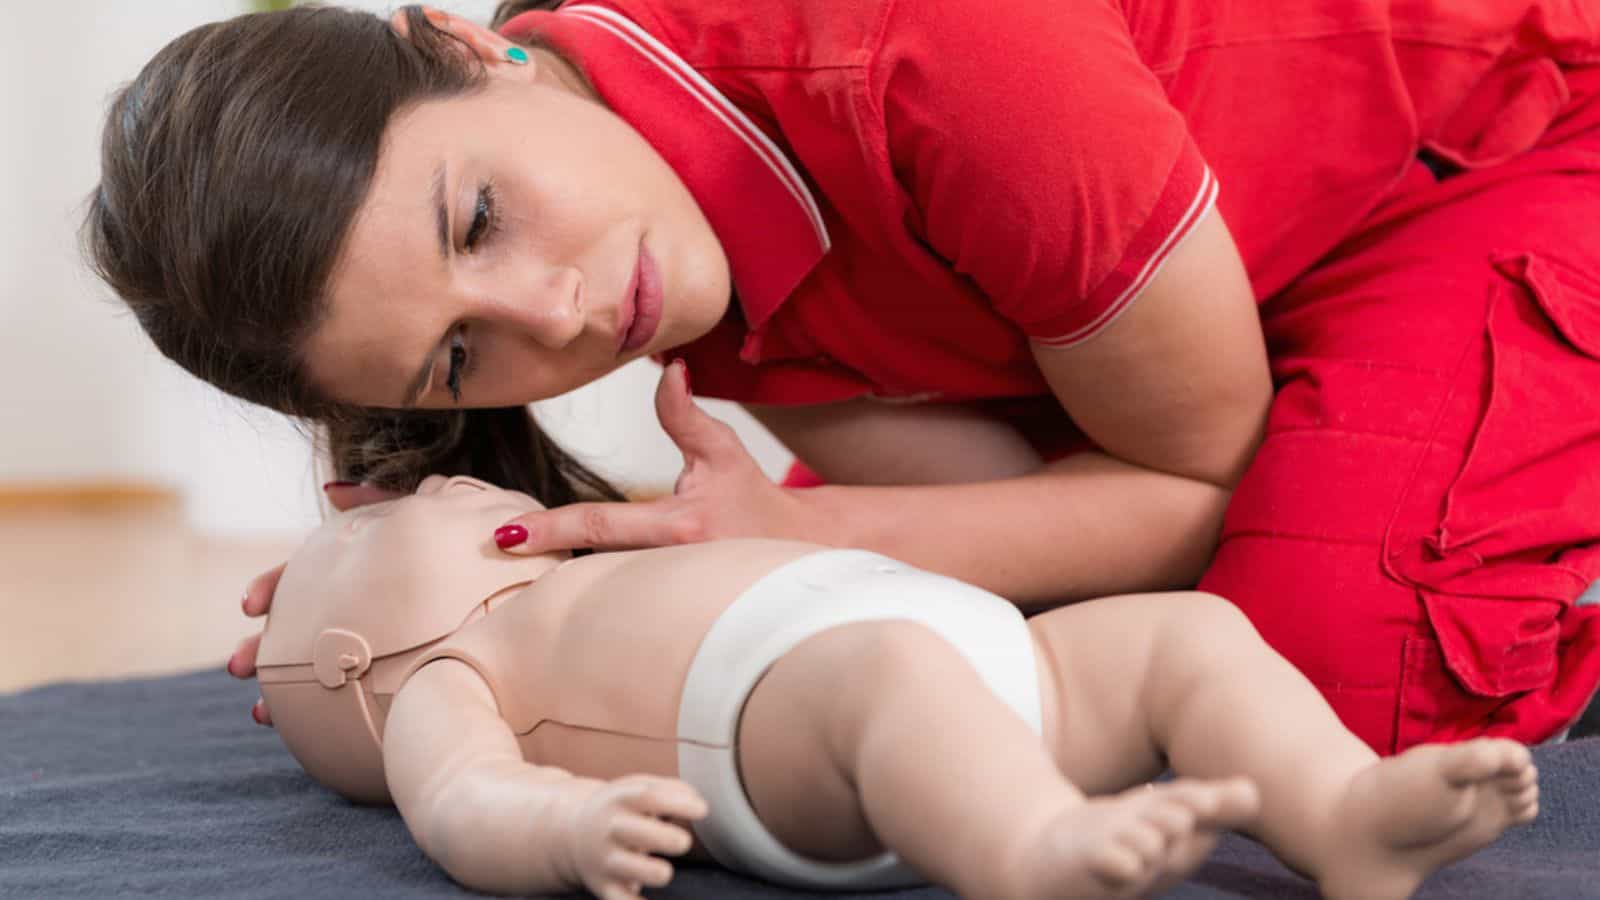 First Aid Training - Cardiopulmonary resuscitation